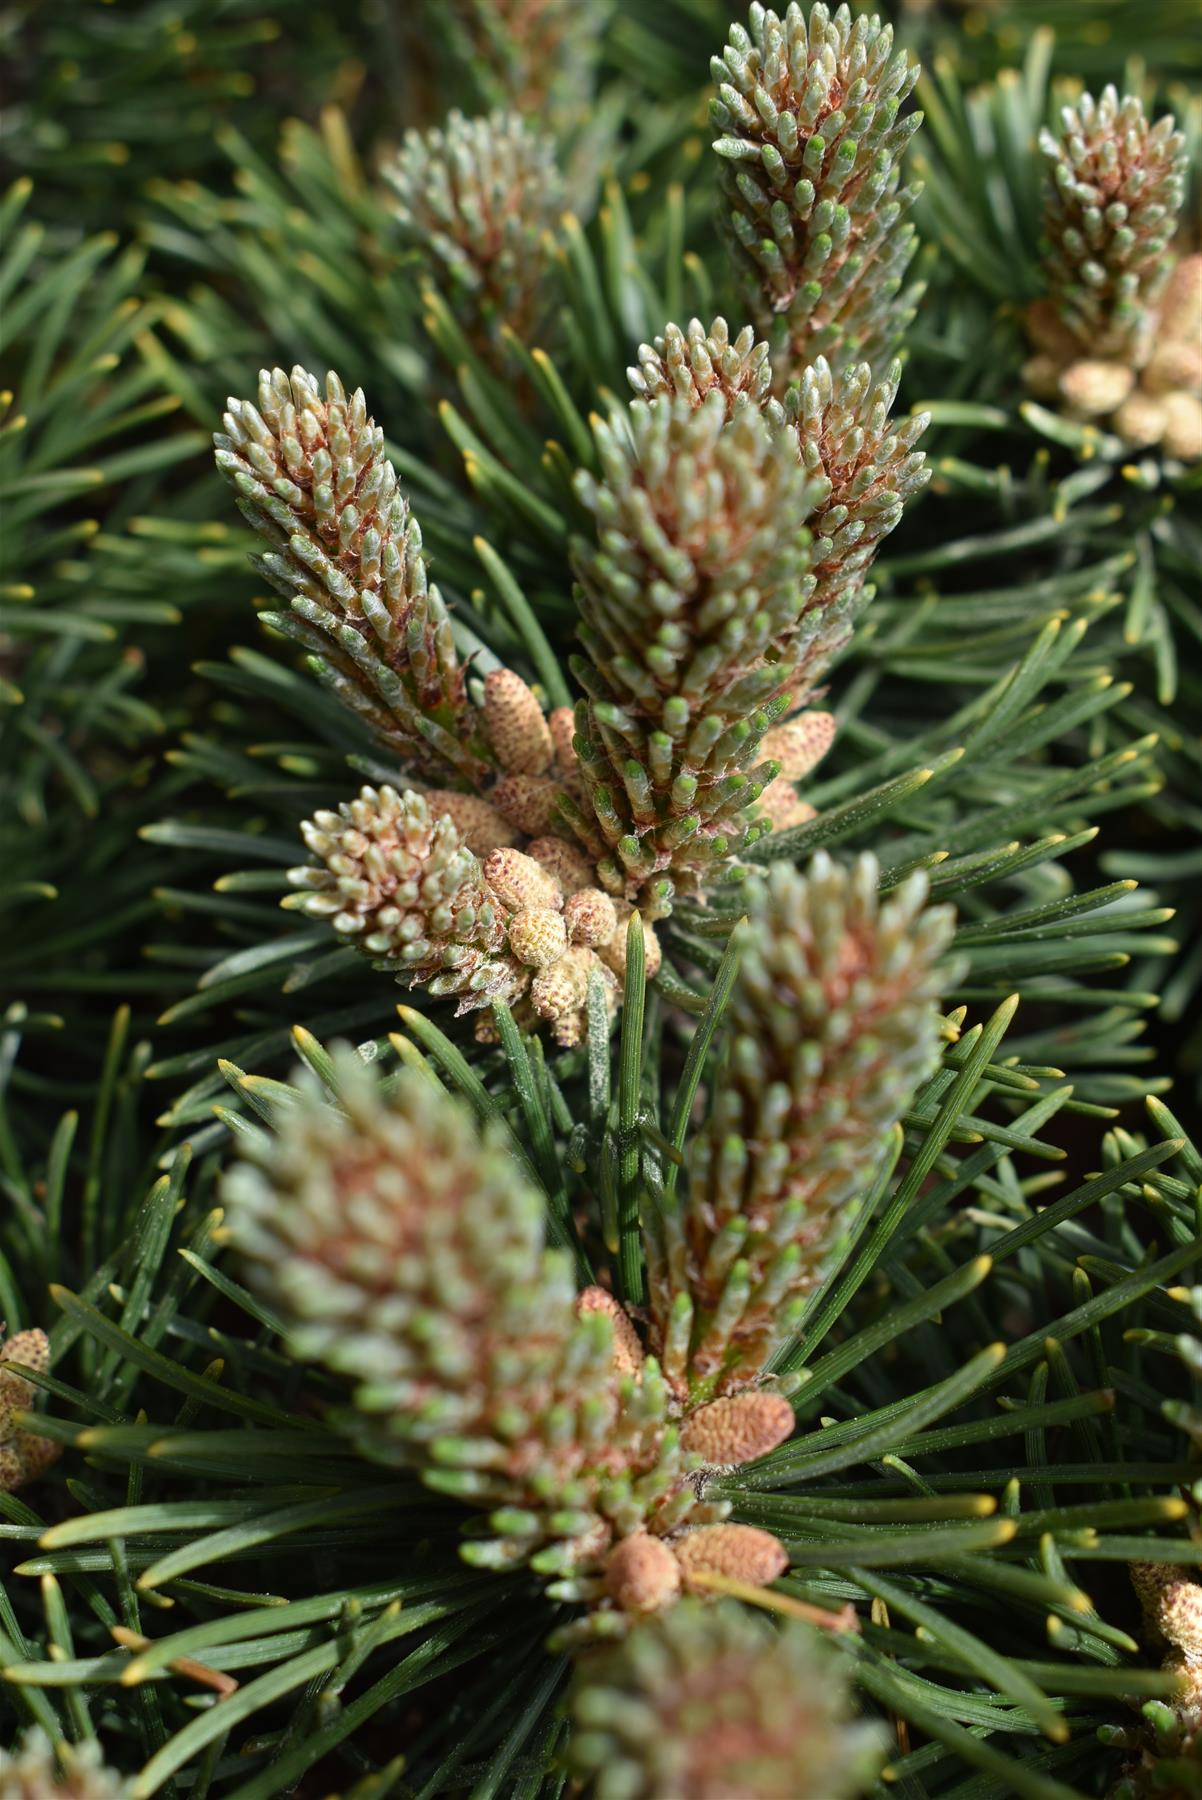 Pinus mugo 'Sherwood Compact' | Dwarf mountain pine - Height 30-40cm - Width 20cm - 10lt